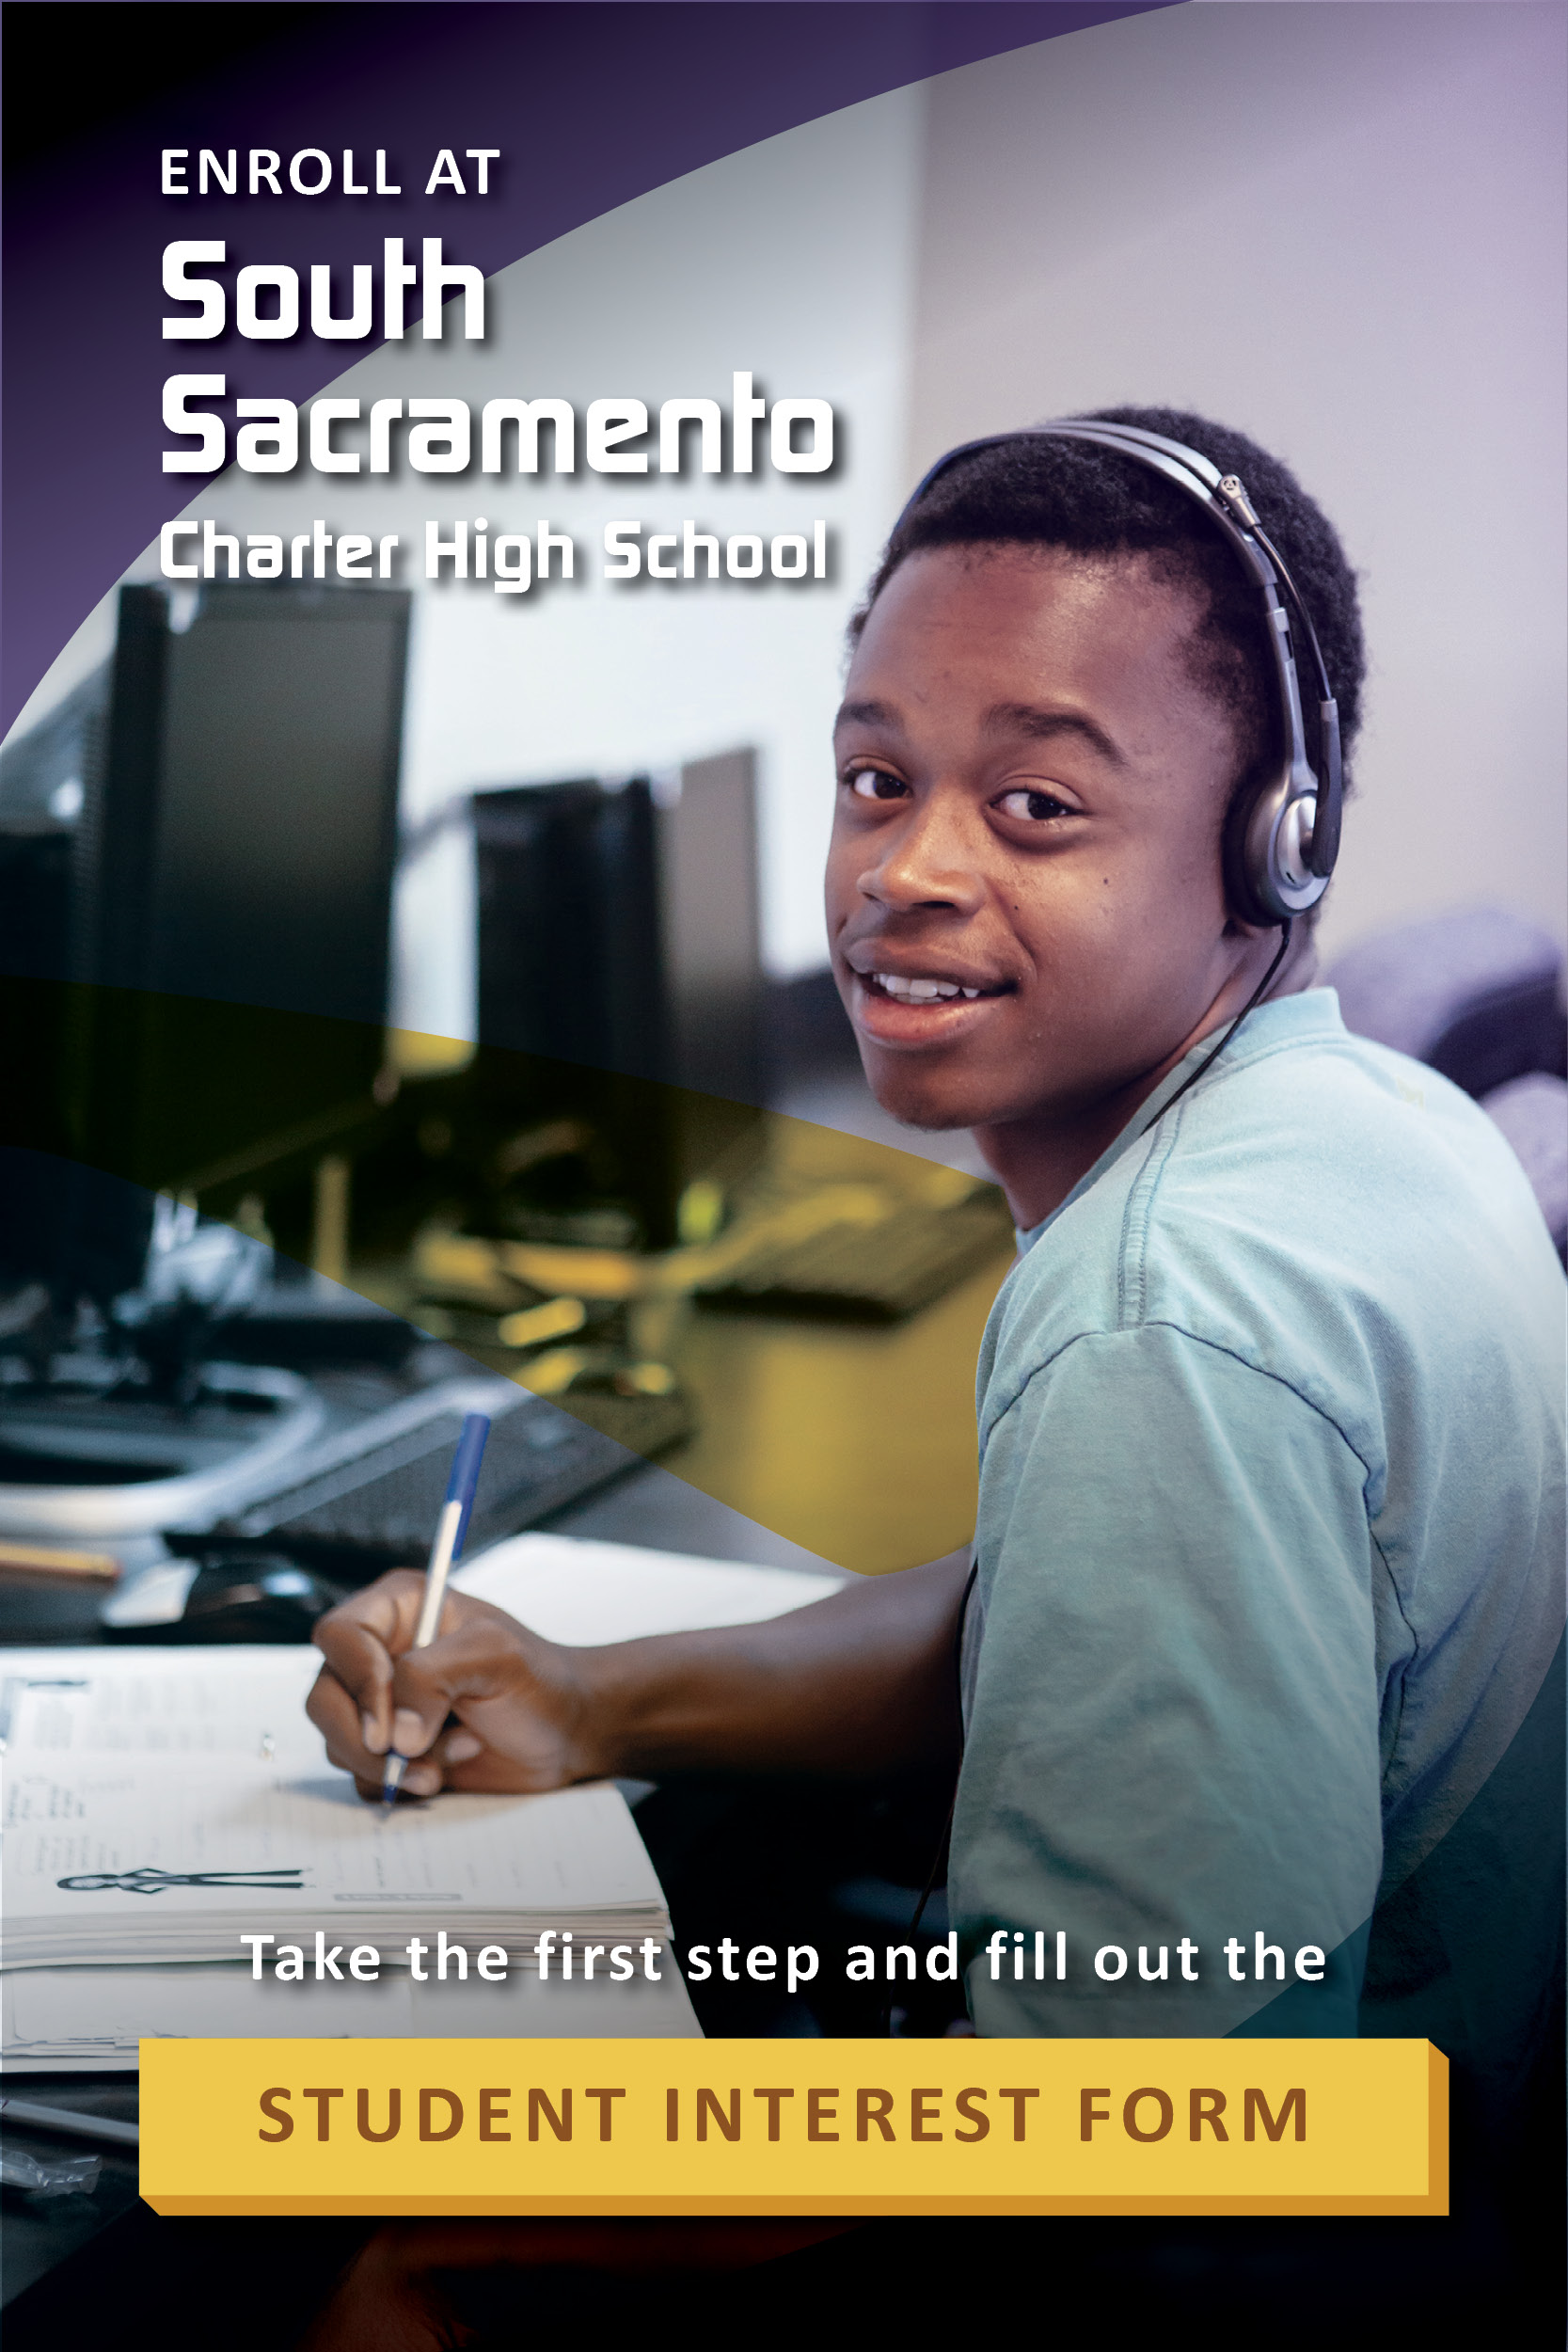 South-Sacramento-Charter-High-School-Diploma.jpg